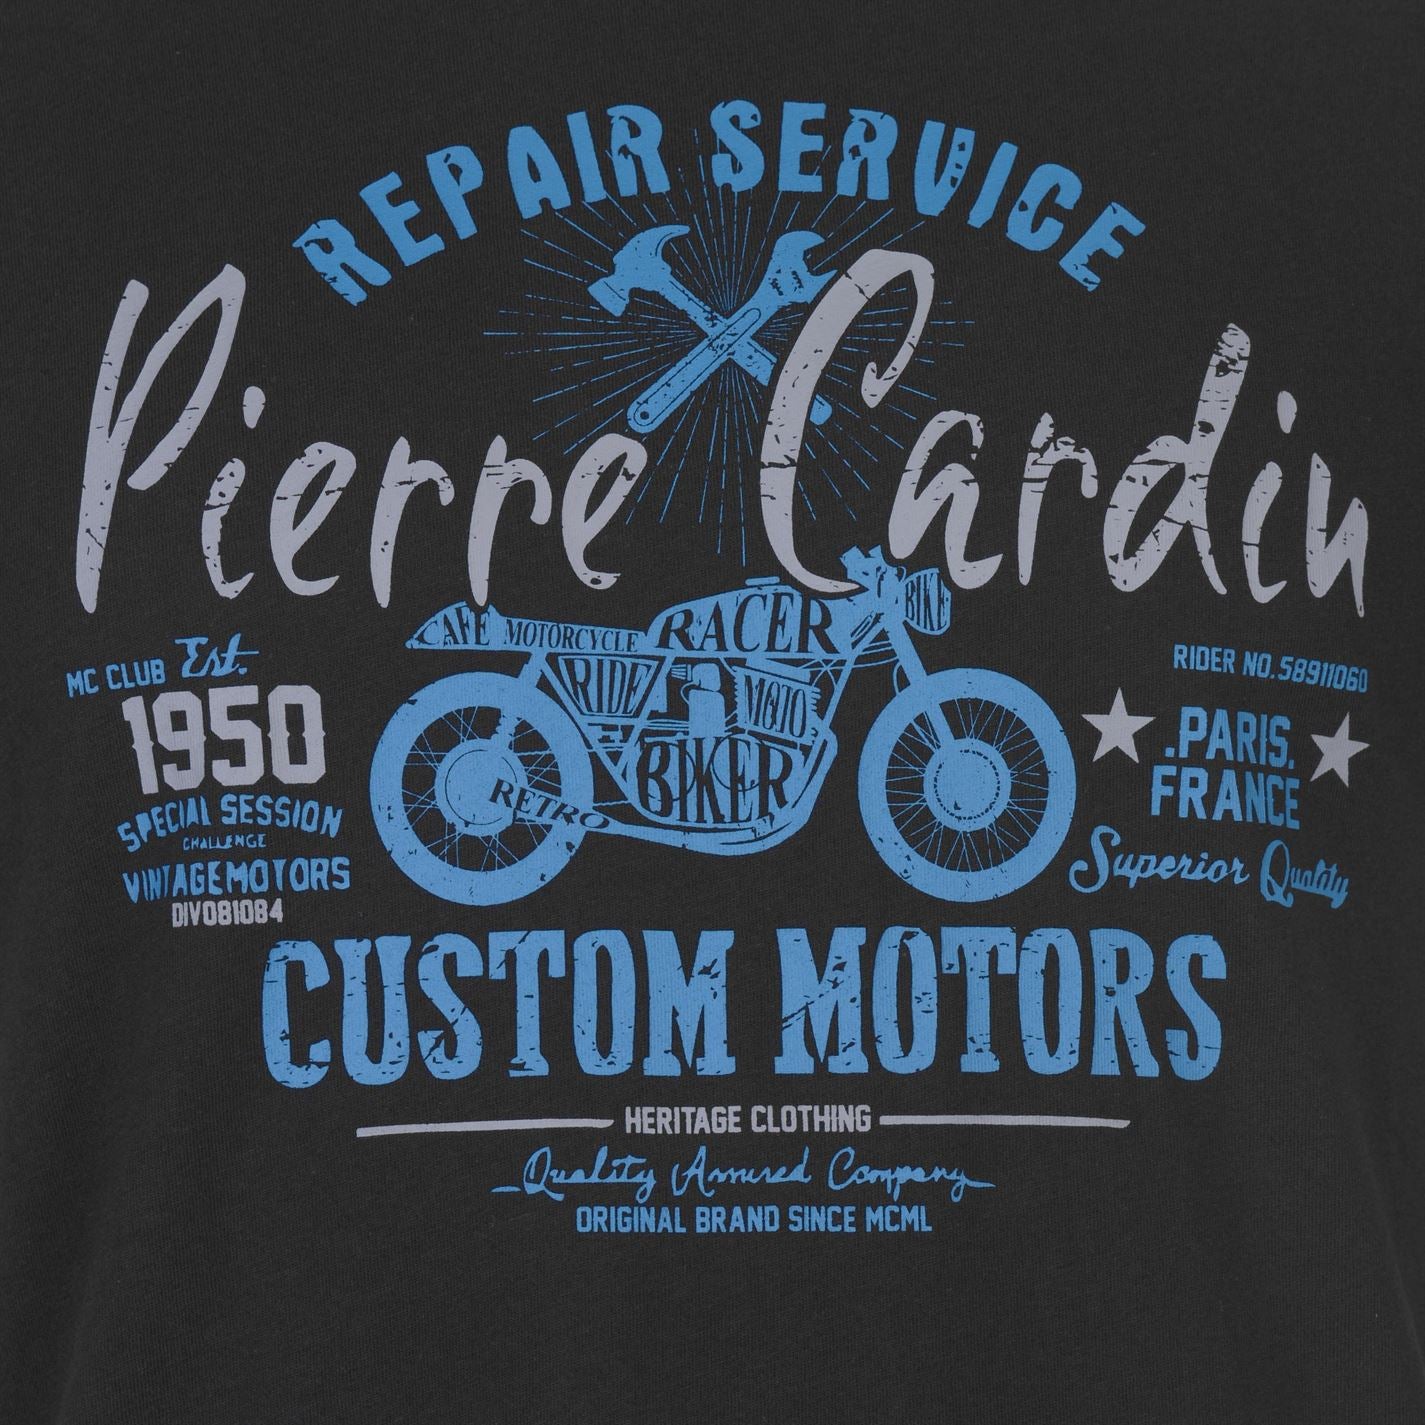 Pierre Cardin Mens Short Sleeve Printed Tee Crew Neck Shirt Cotton Regular Fit